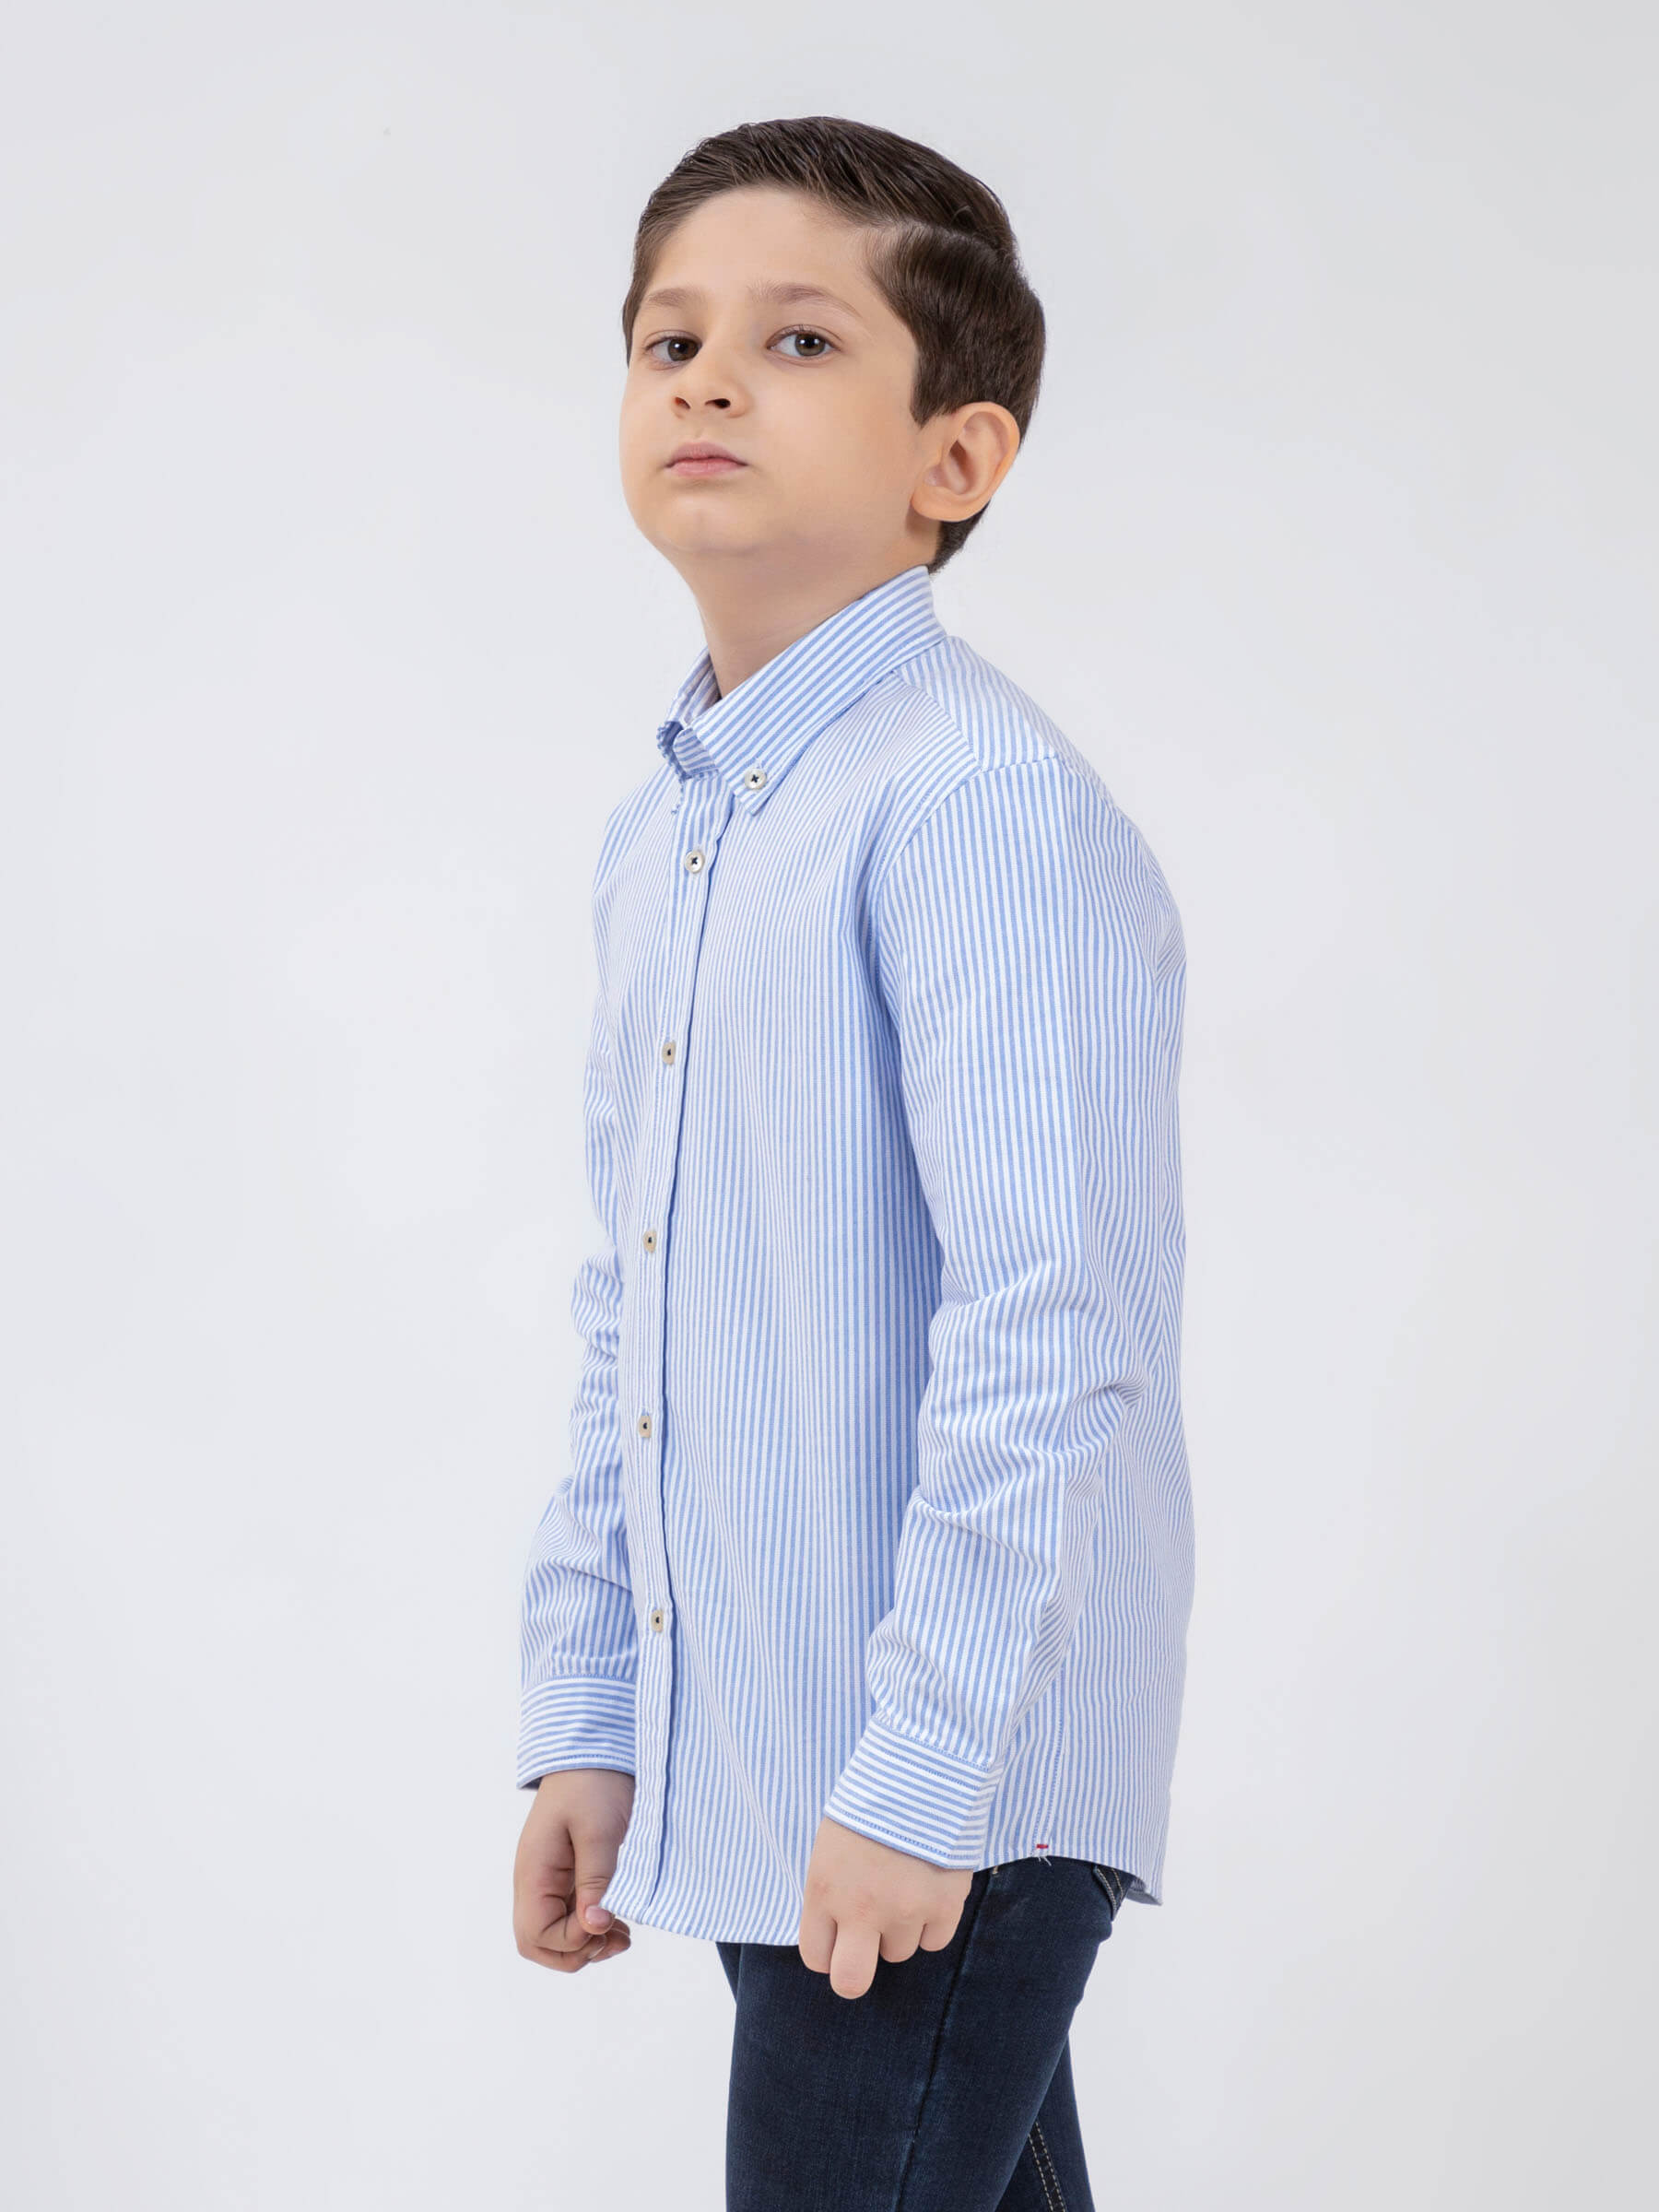 Blue Oxford Striped Long Sleeve Casual Shirt Brumano Pakistan